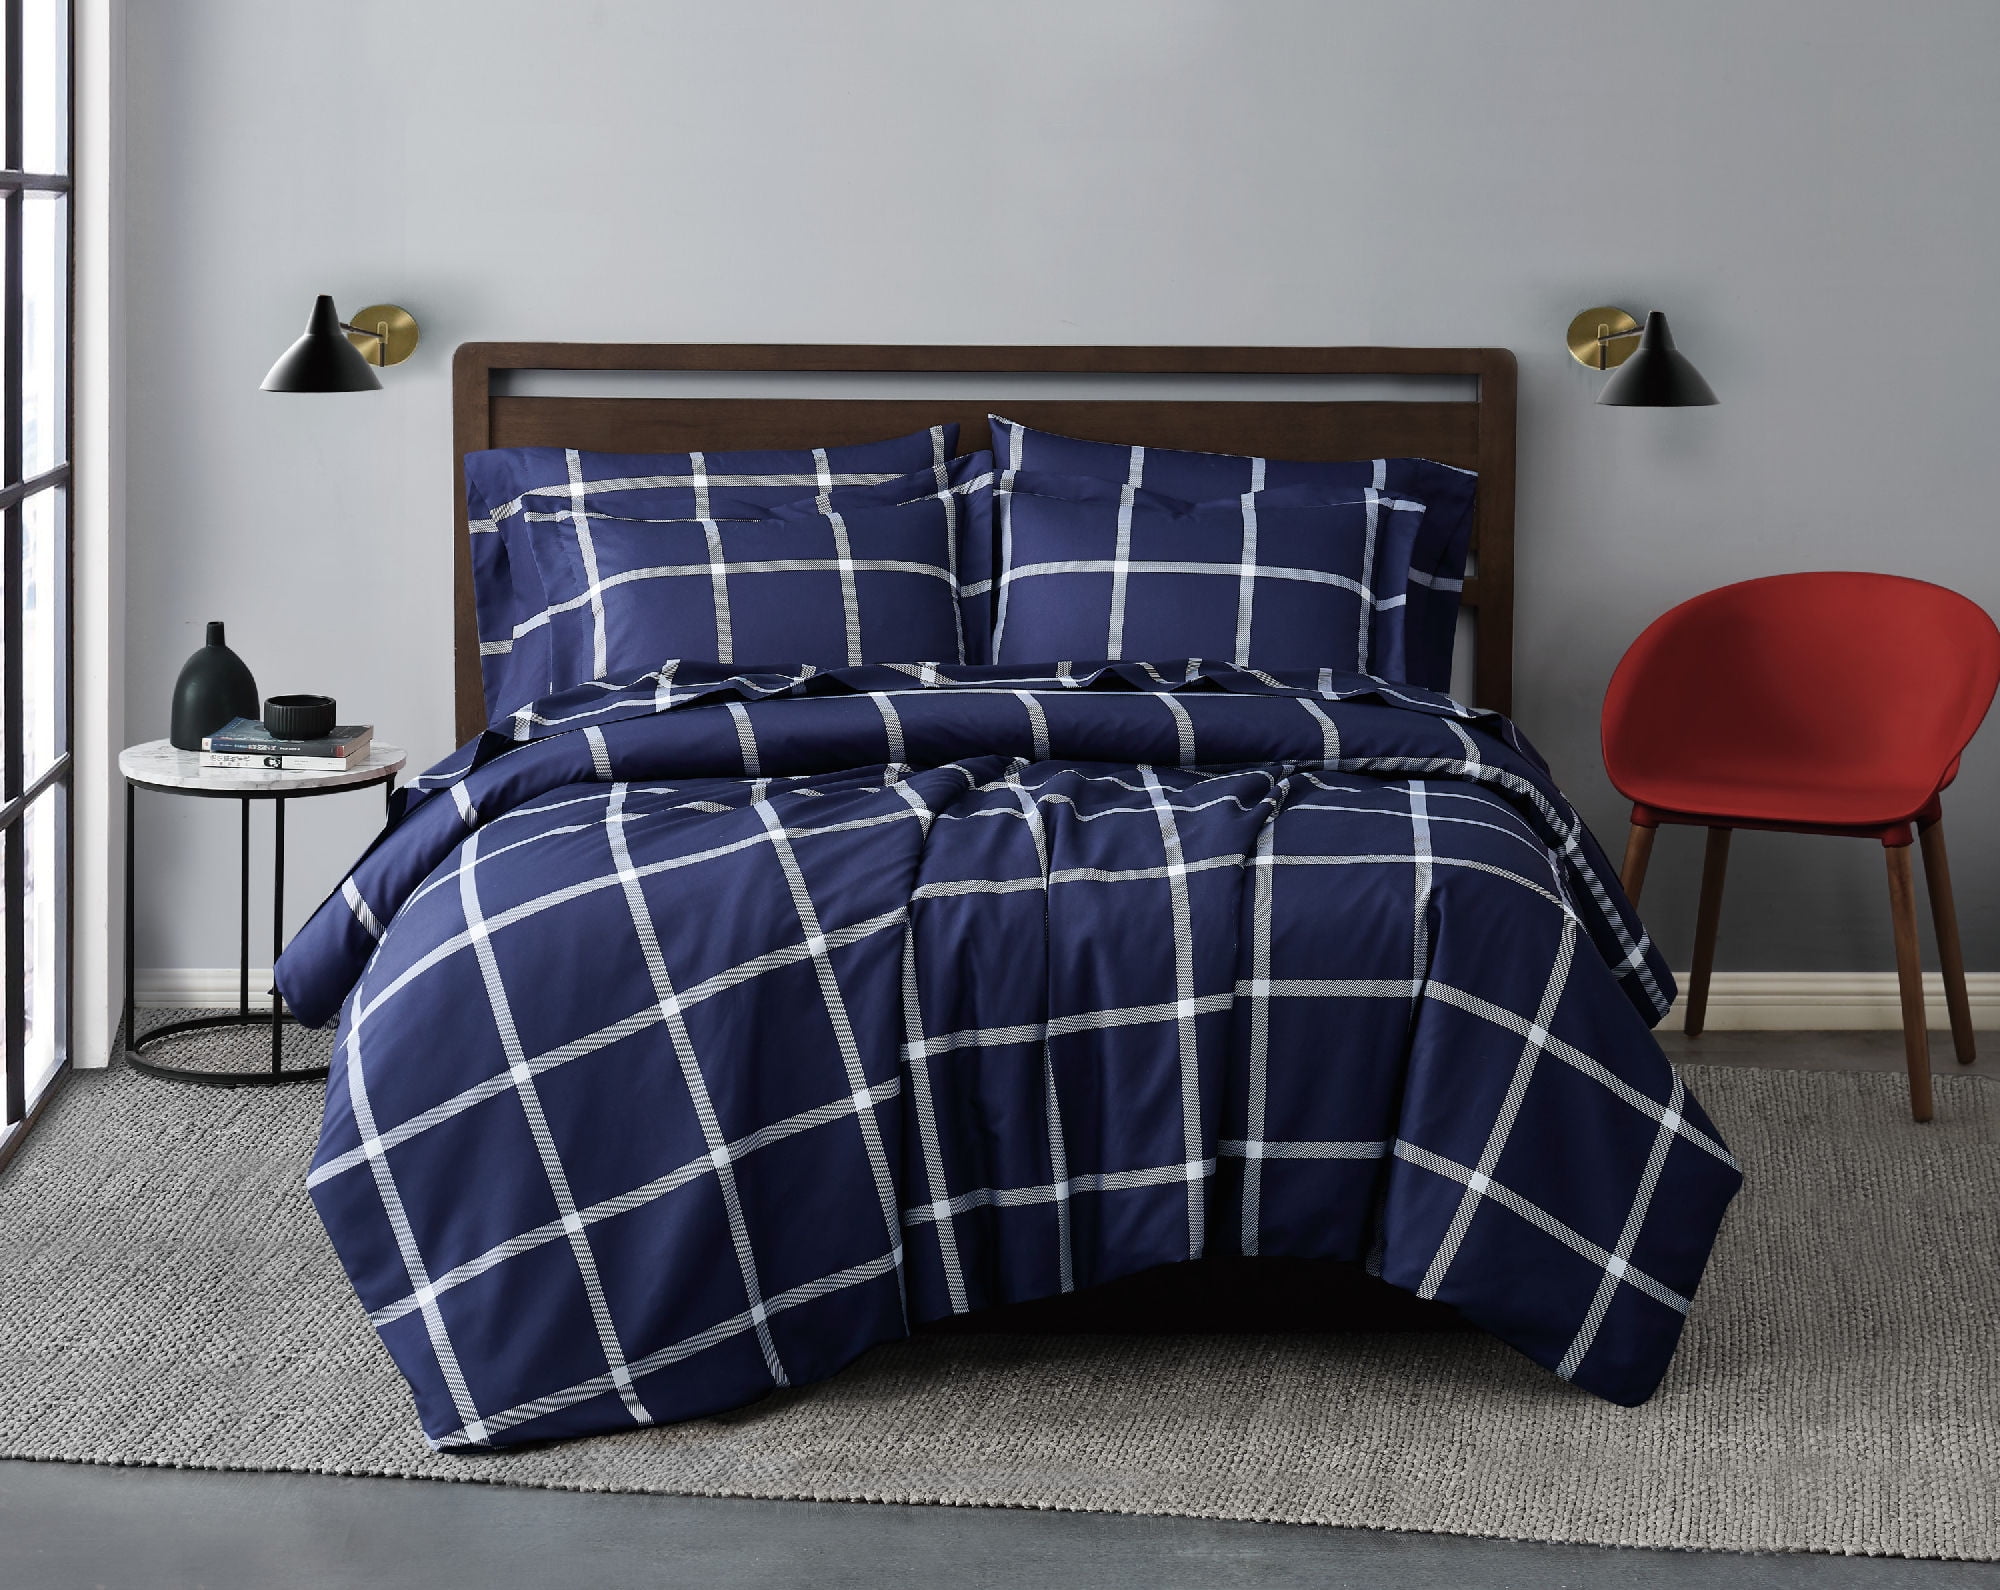 Details about   IZOD Classic Stripe Comforter Set Size Twin 